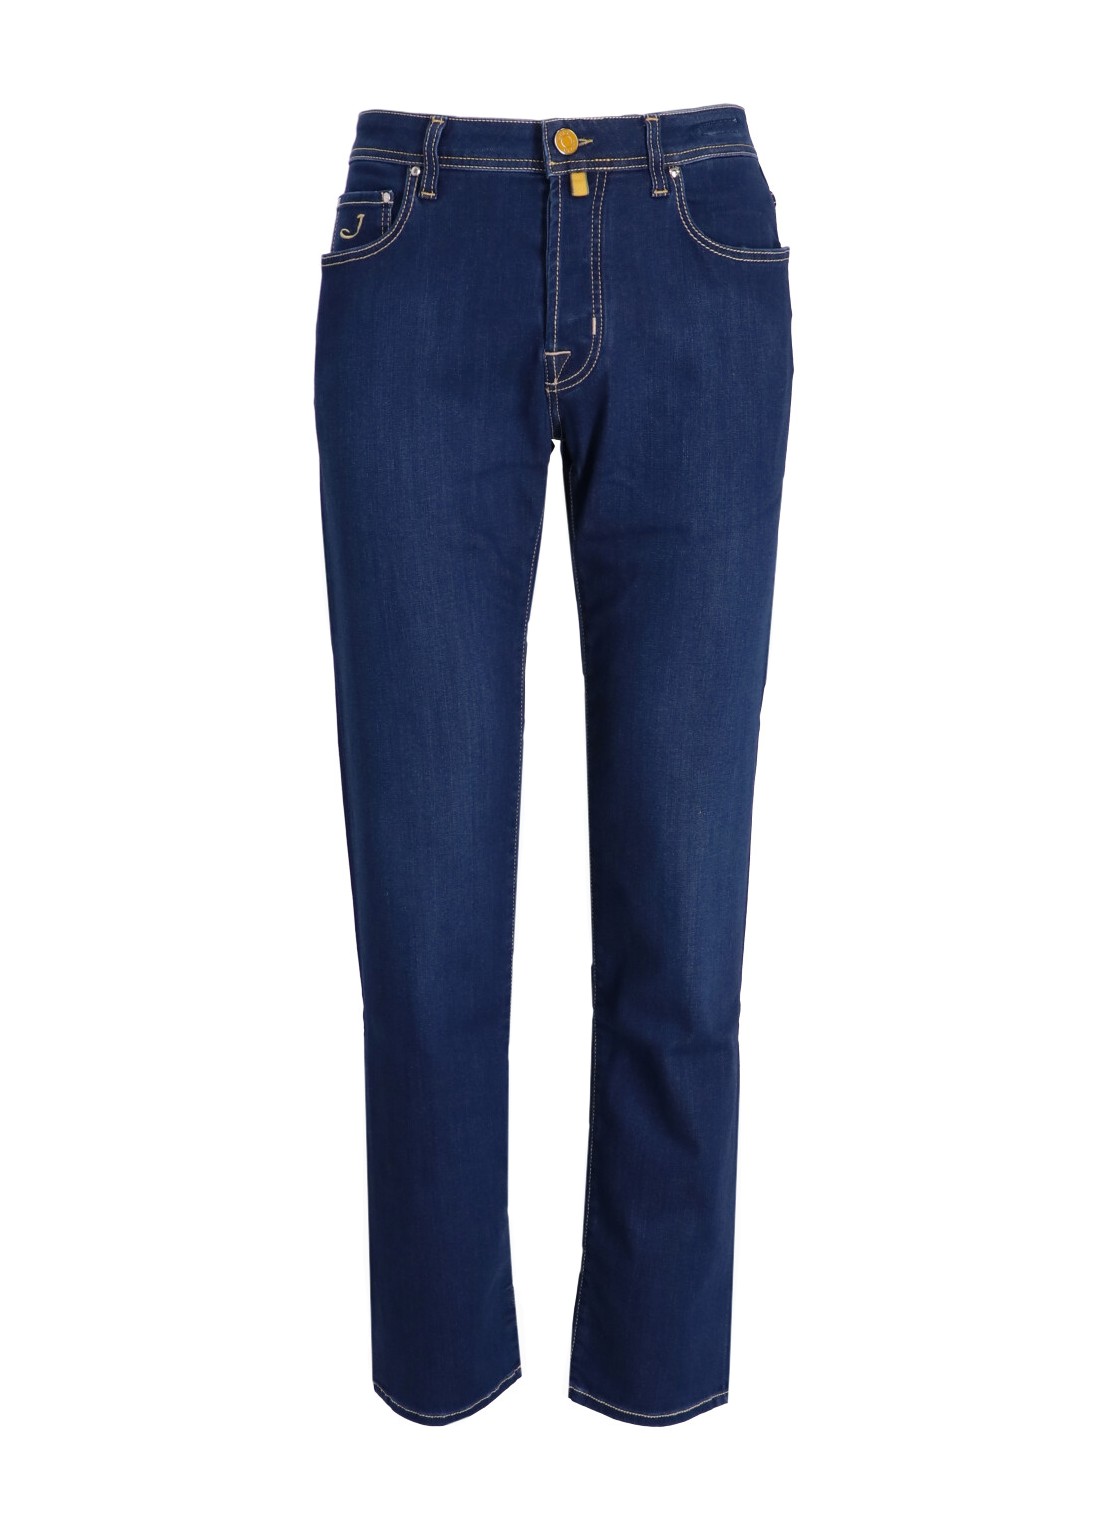 Pantalon jeans jacob cohen denim manpant 5 pkt slim fit bard - uqe0434p3582 755d talla 38
 